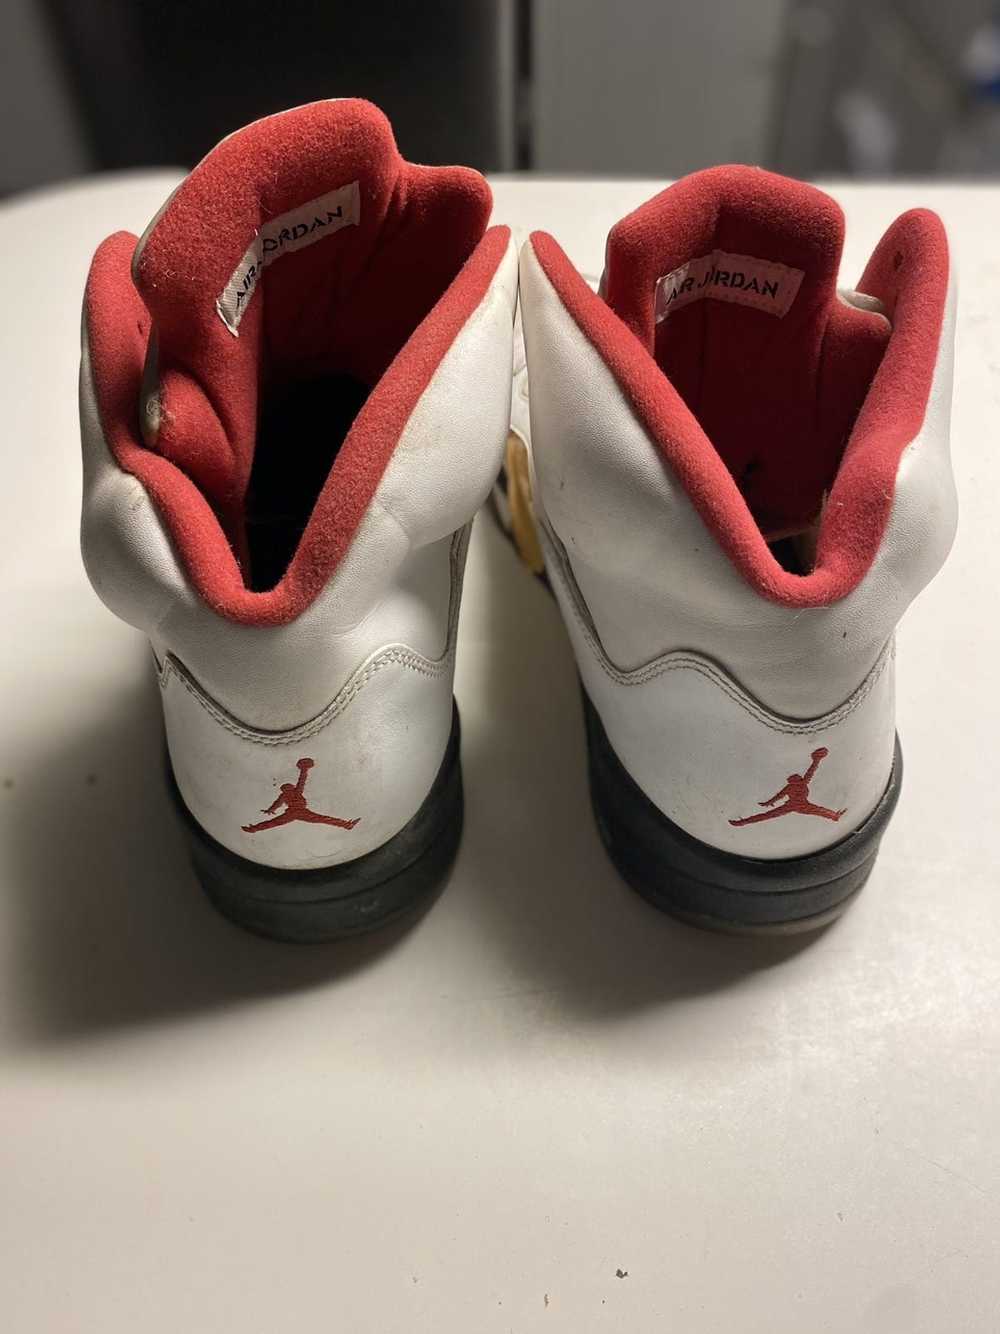 Jordan Brand Jordan 5 retro fire reds - image 4